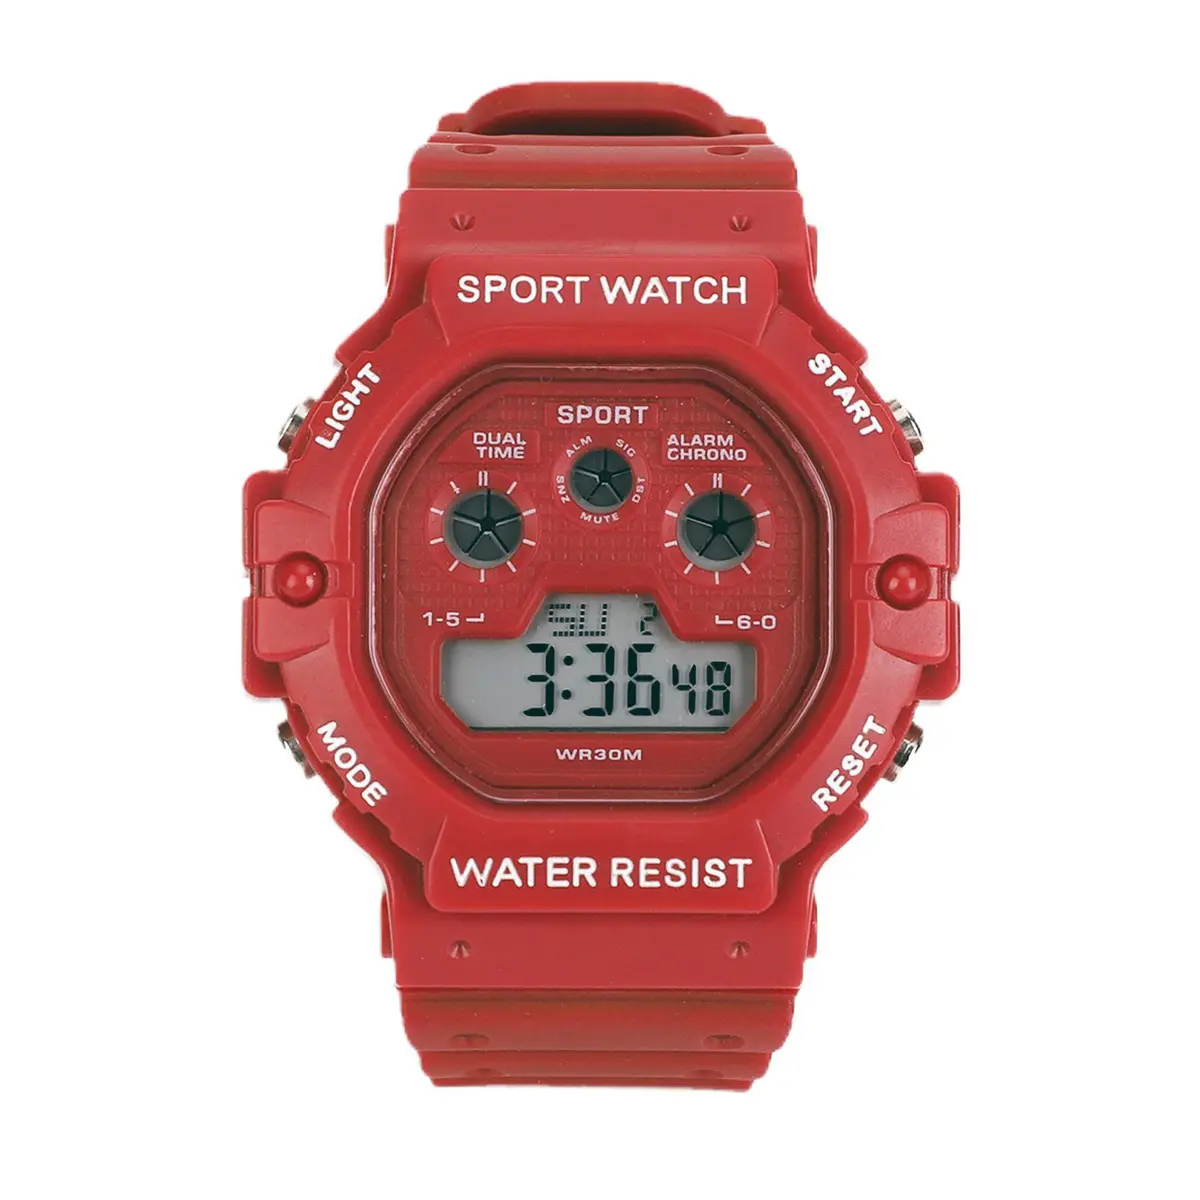 Fashion students quamer sport watch price waterproof black sports watch for ladies in wristwatches retro whach digital watches